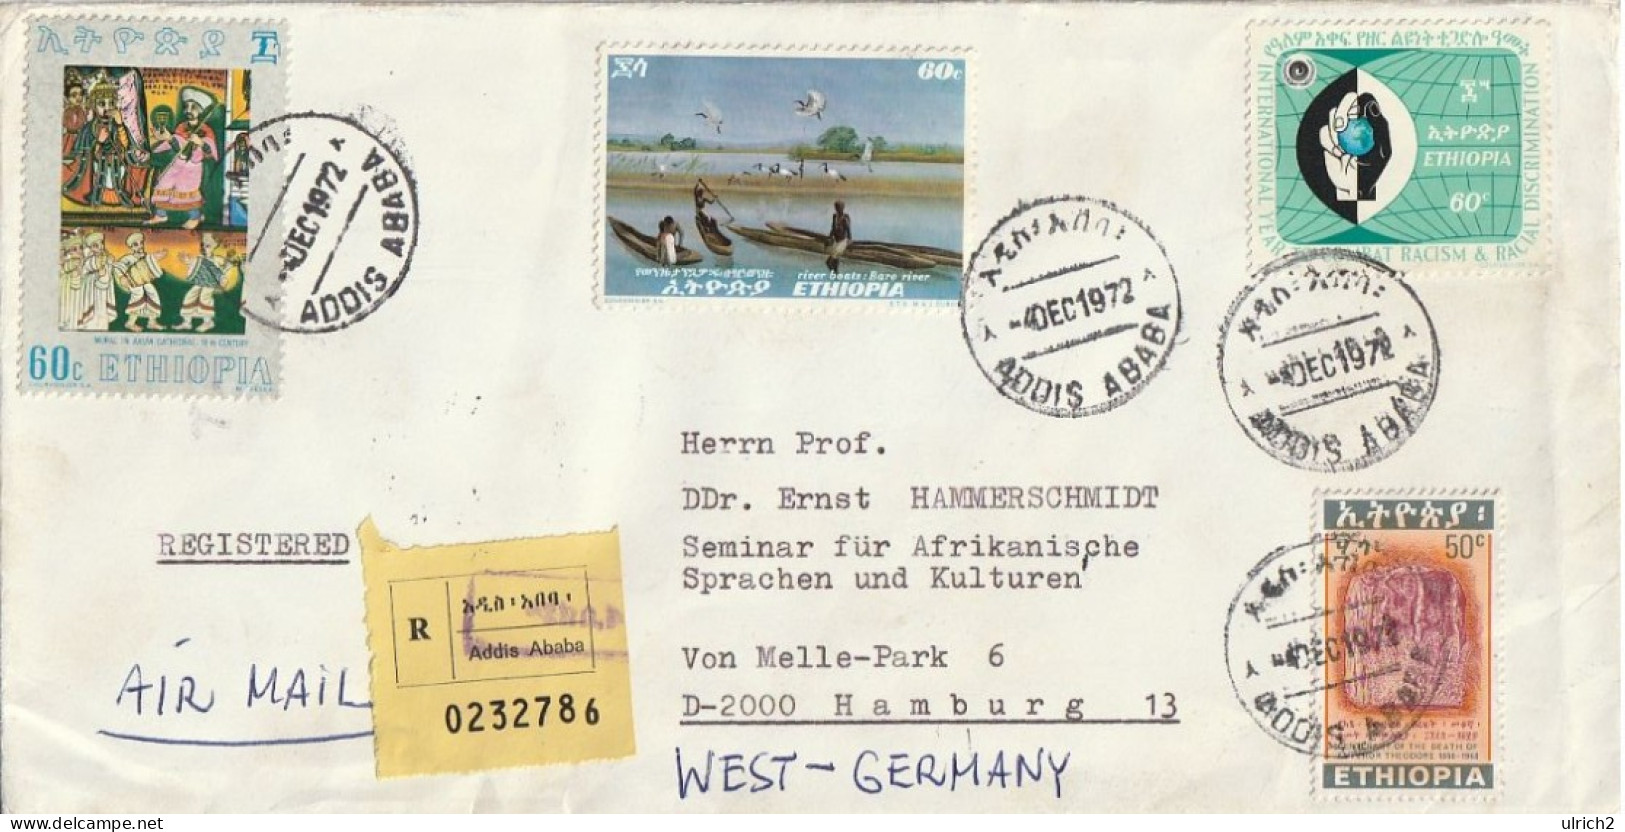 Äthiopien Ethiopia - Airmail Registered Letter - Austrian Embassy - To Germany - 1972 (67141) - Etiopia